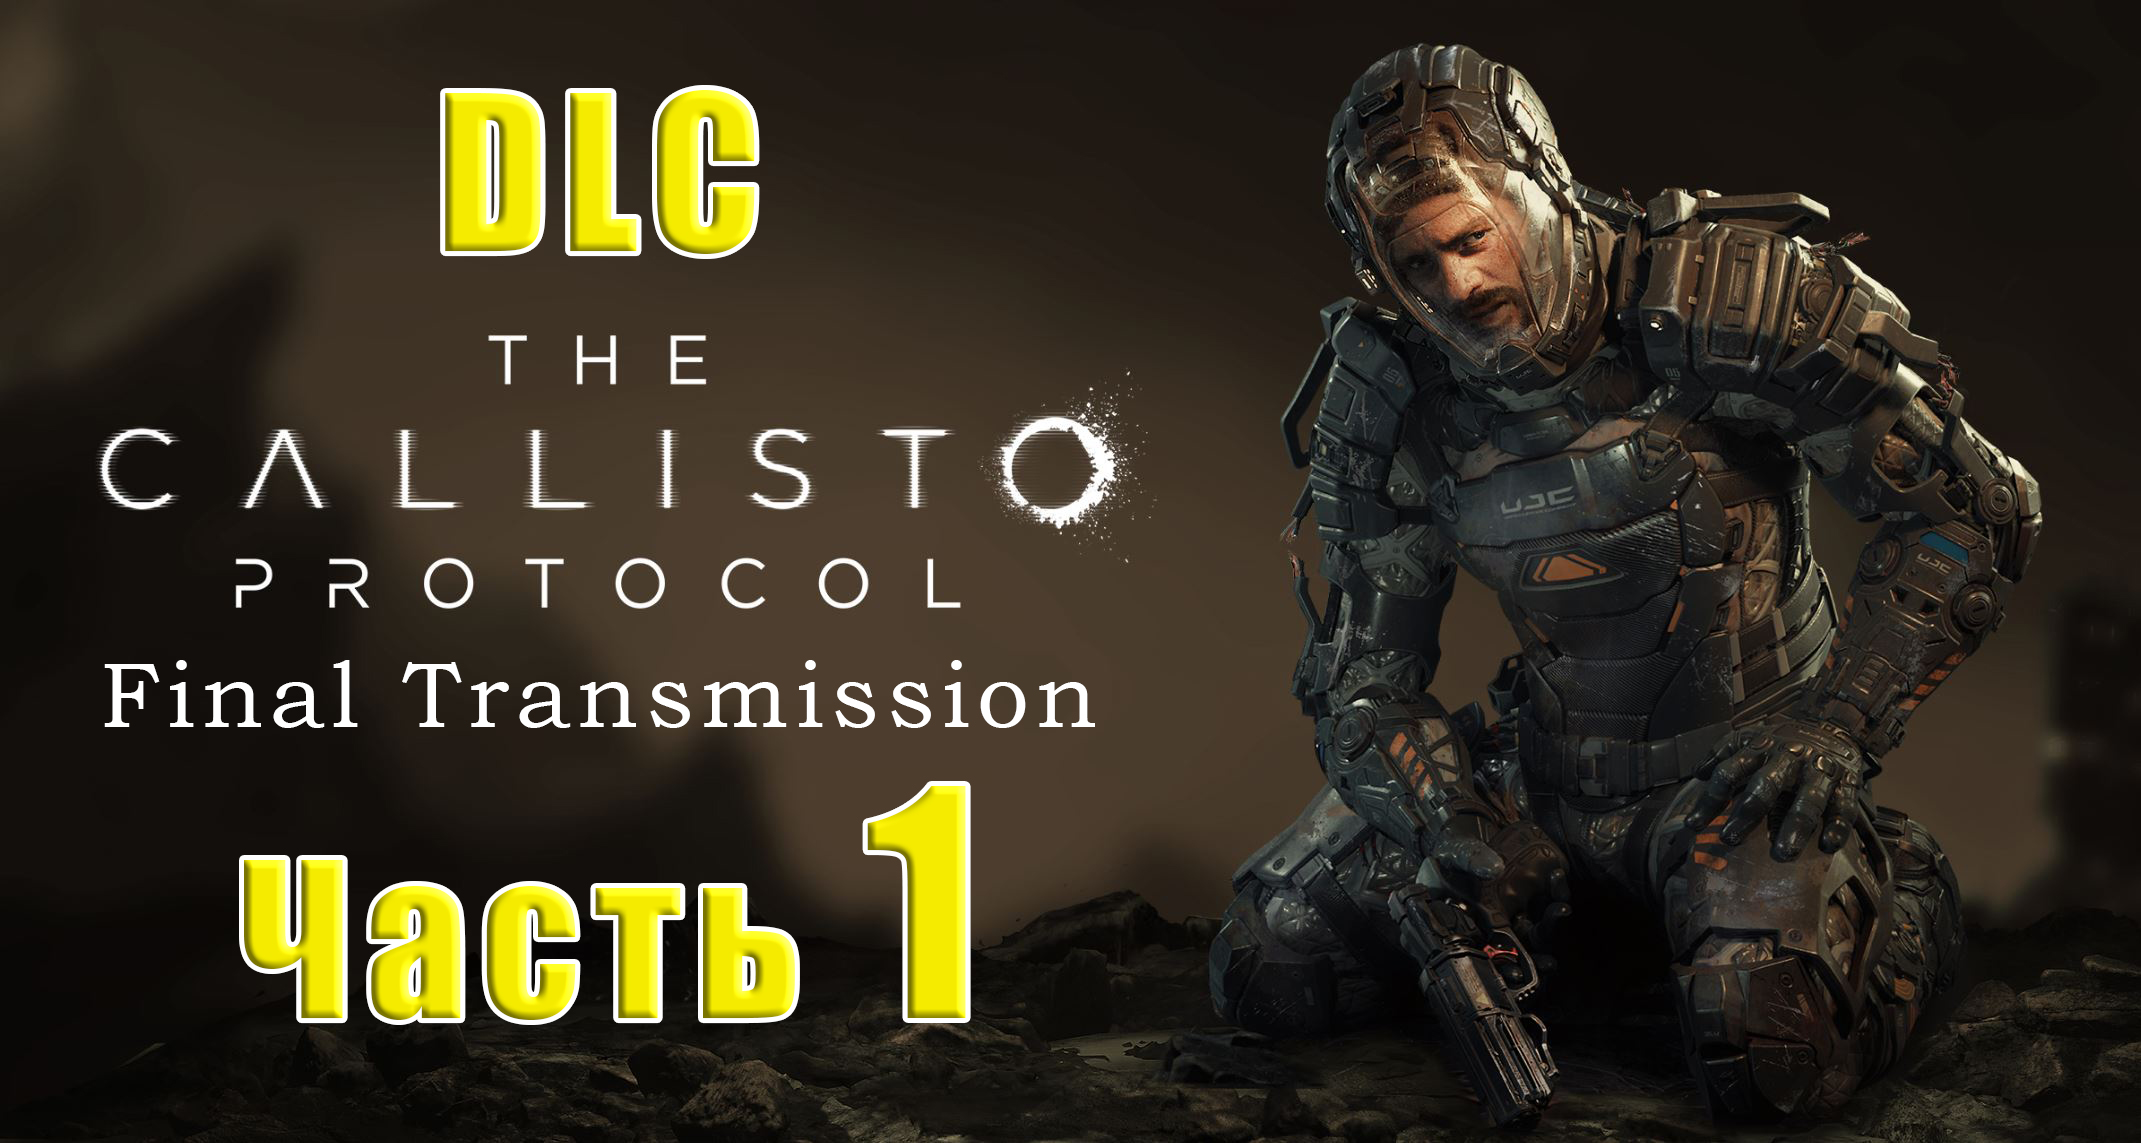 Final transmission. DLC игра. Продолжение Callisto Protocol Final transmission. The Callisto Protocol Джейкоб. The Callisto Protocol Final transmission заставка.